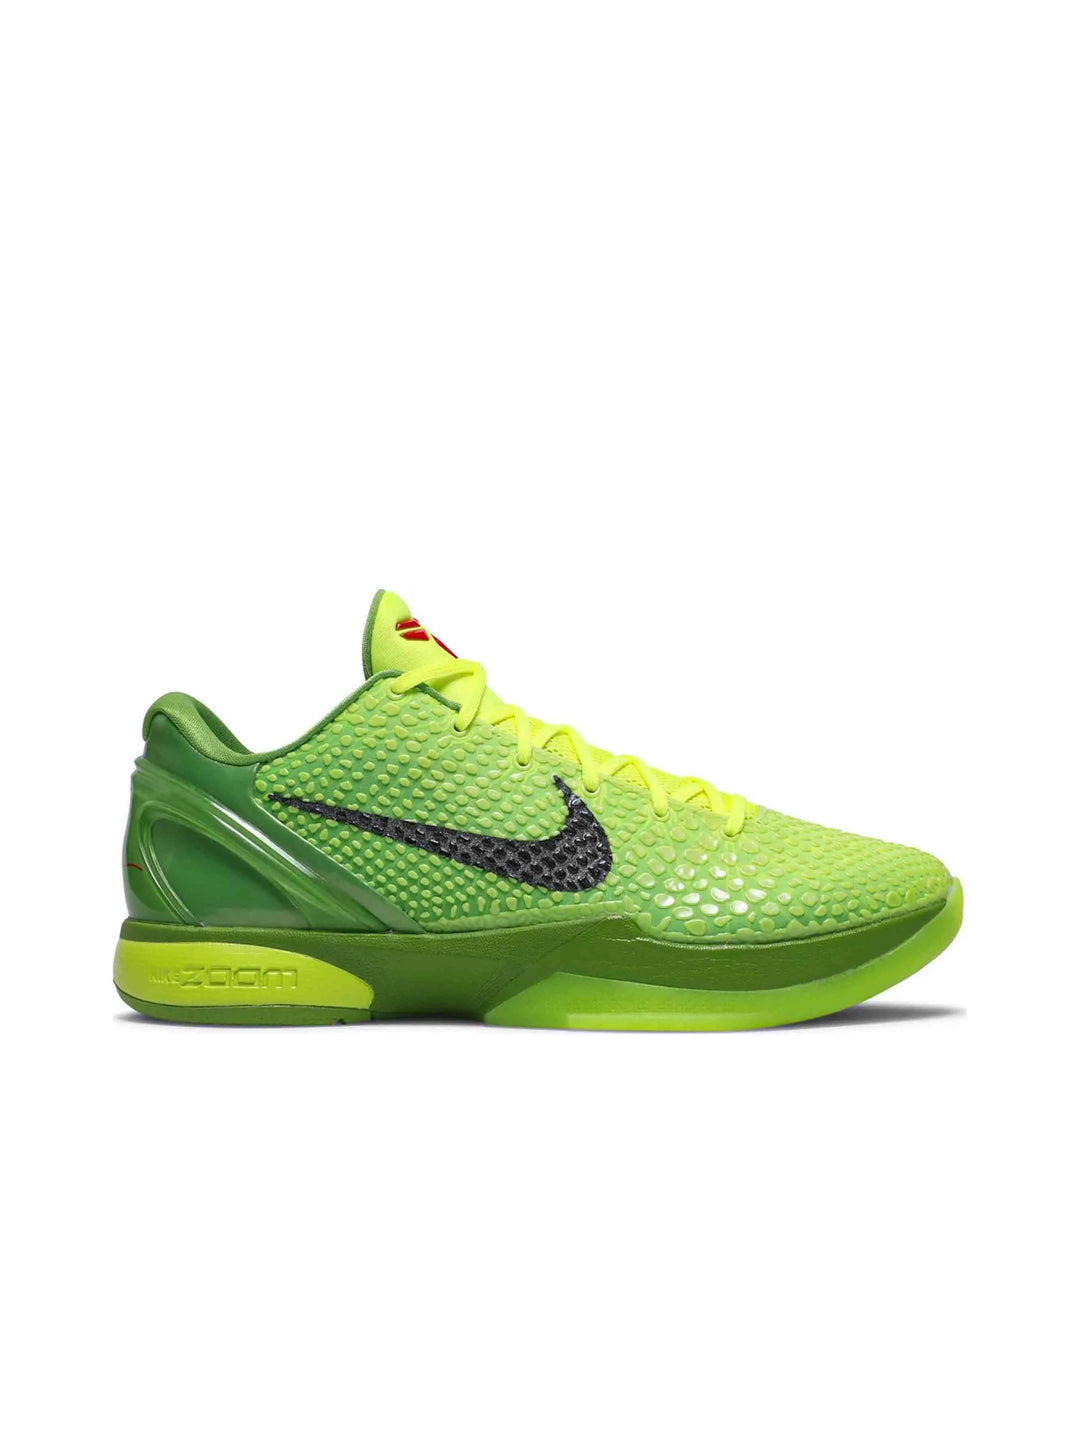 Nike Kobe 6 Protro Grinch (2020) in Auckland, New Zealand - Shop name